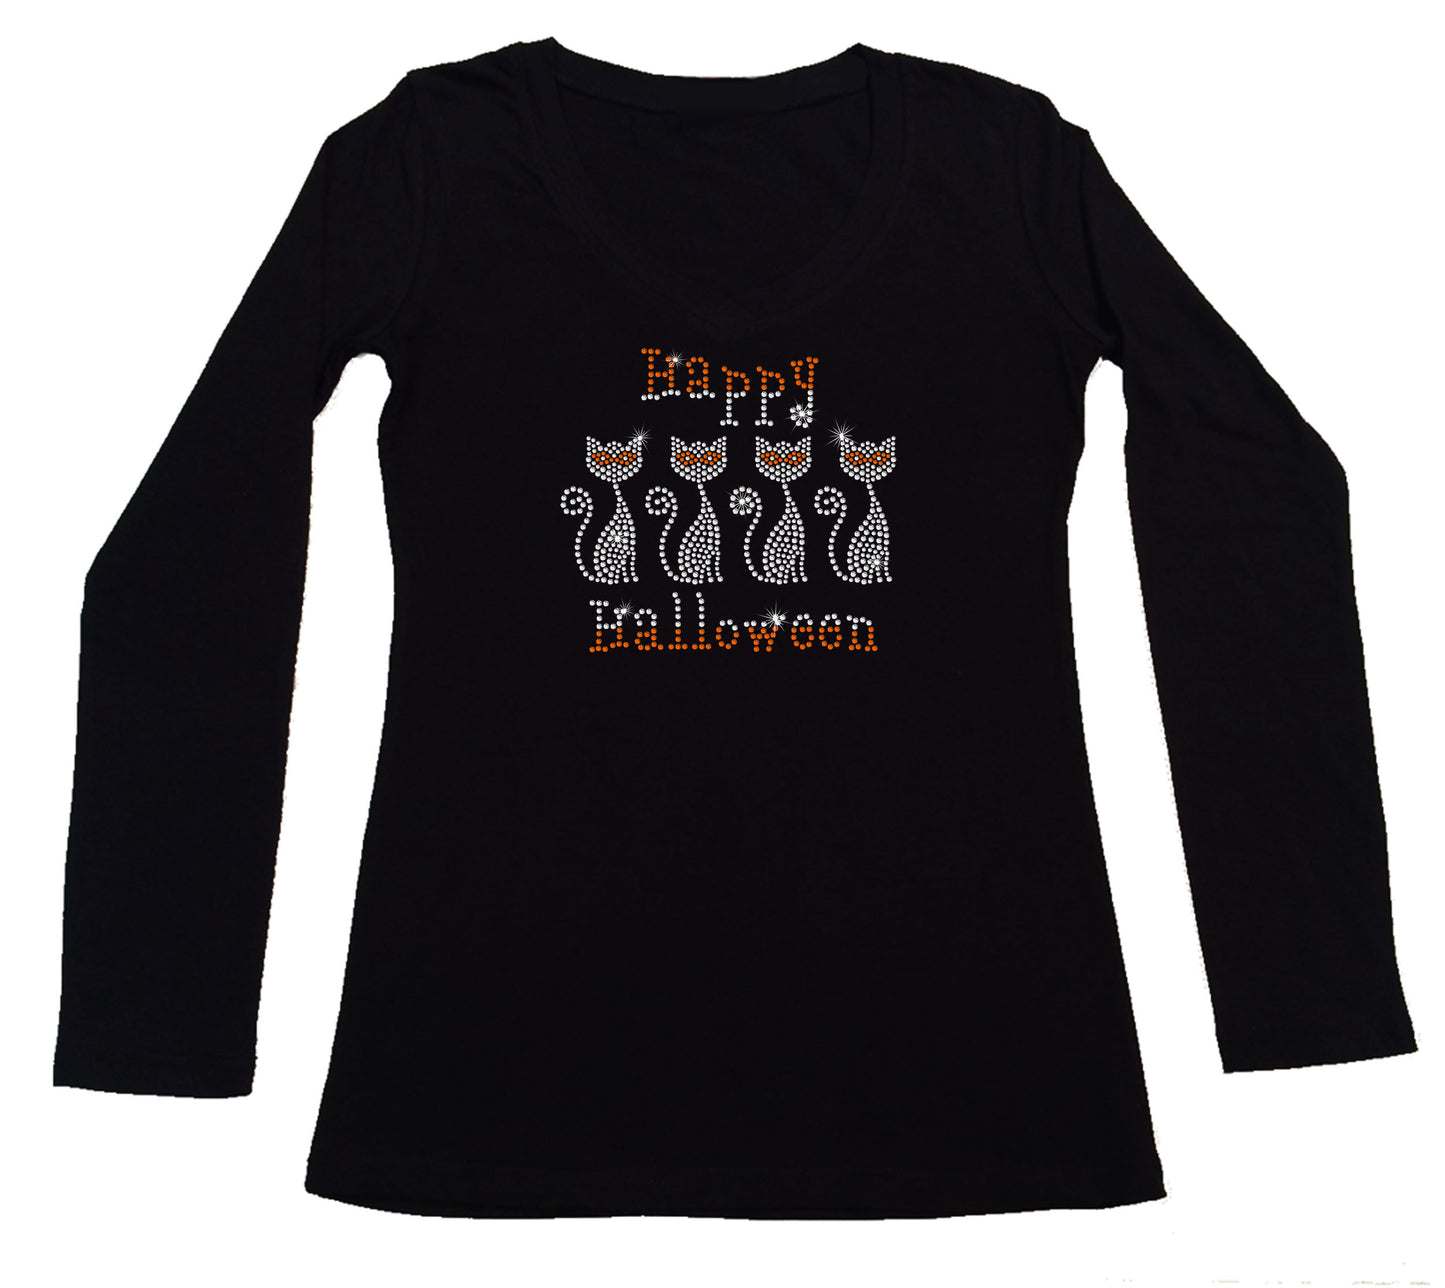 Women's Rhinestone Fitted Tight Snug Shirt Happy Halloween Cats with Masks - Halloween Shirt